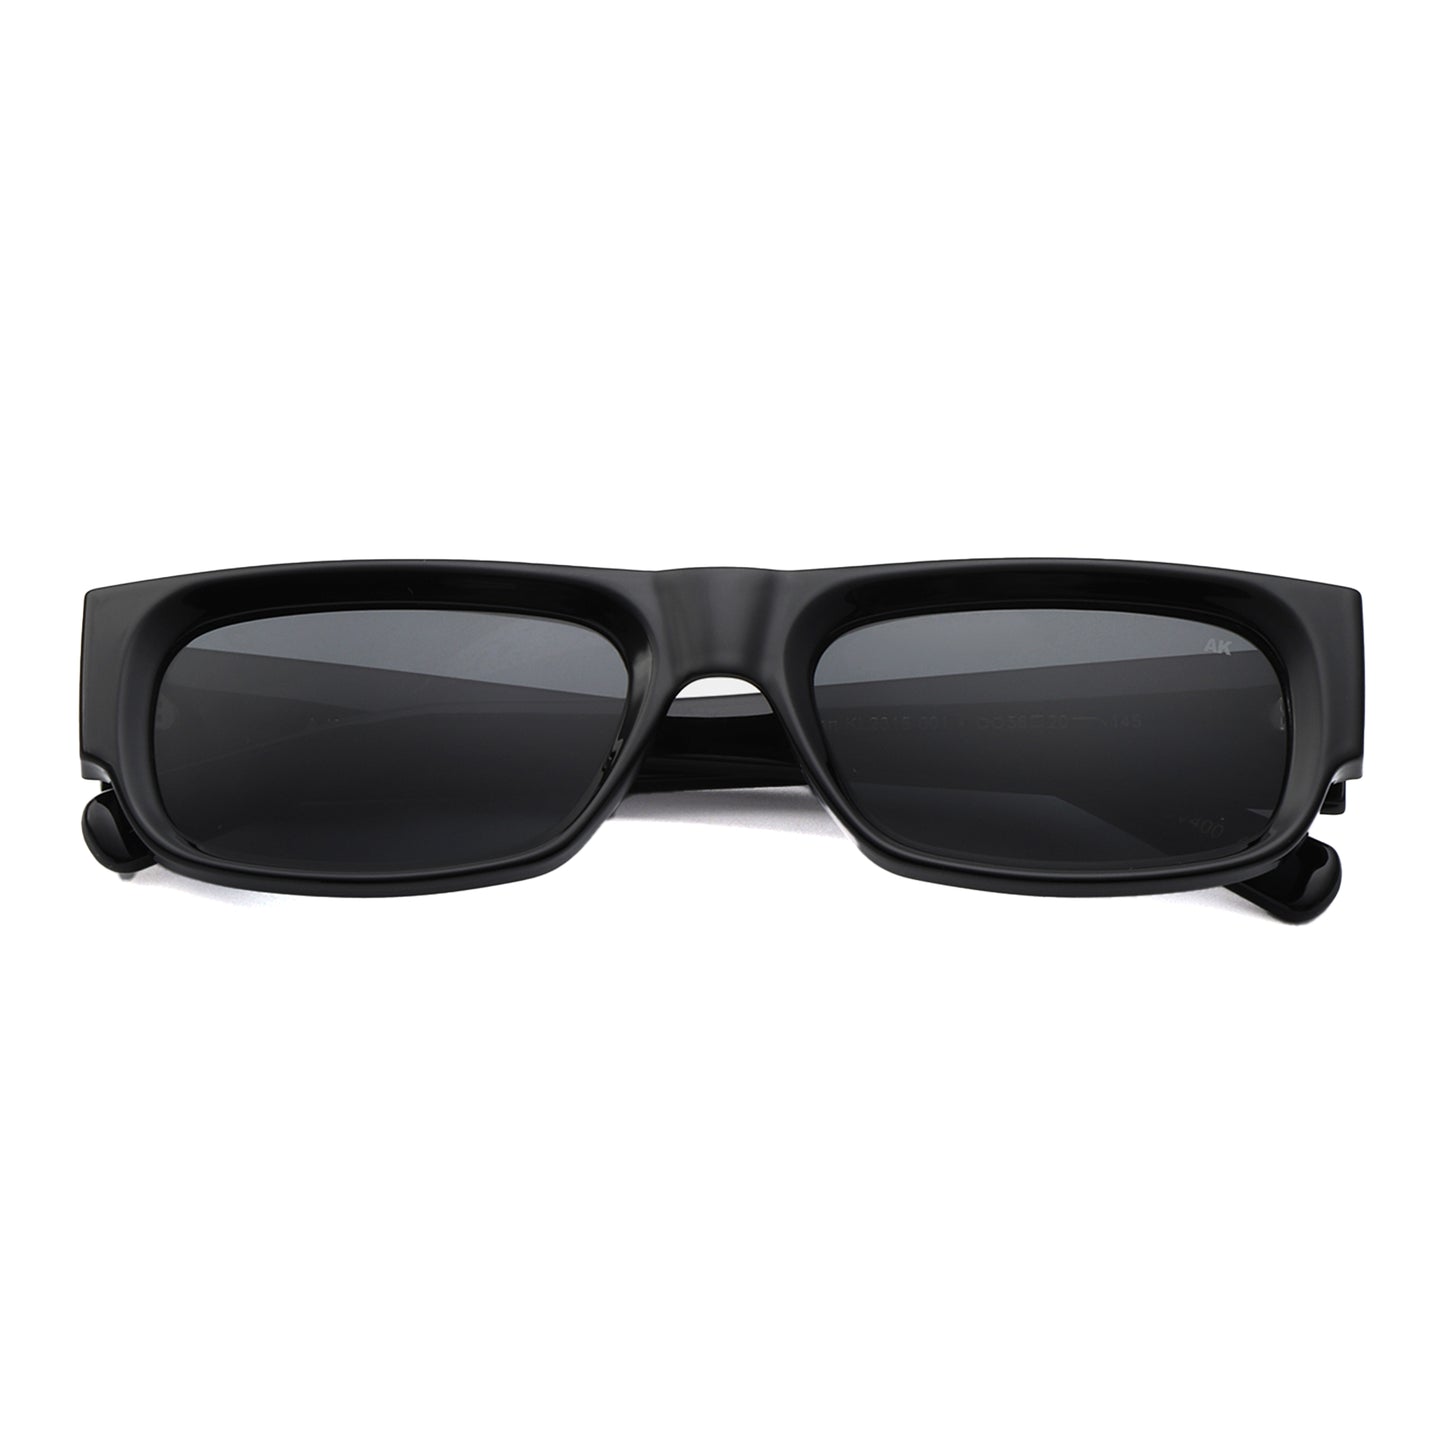 A.Kjaerbede Jean Sunglasses in Black color